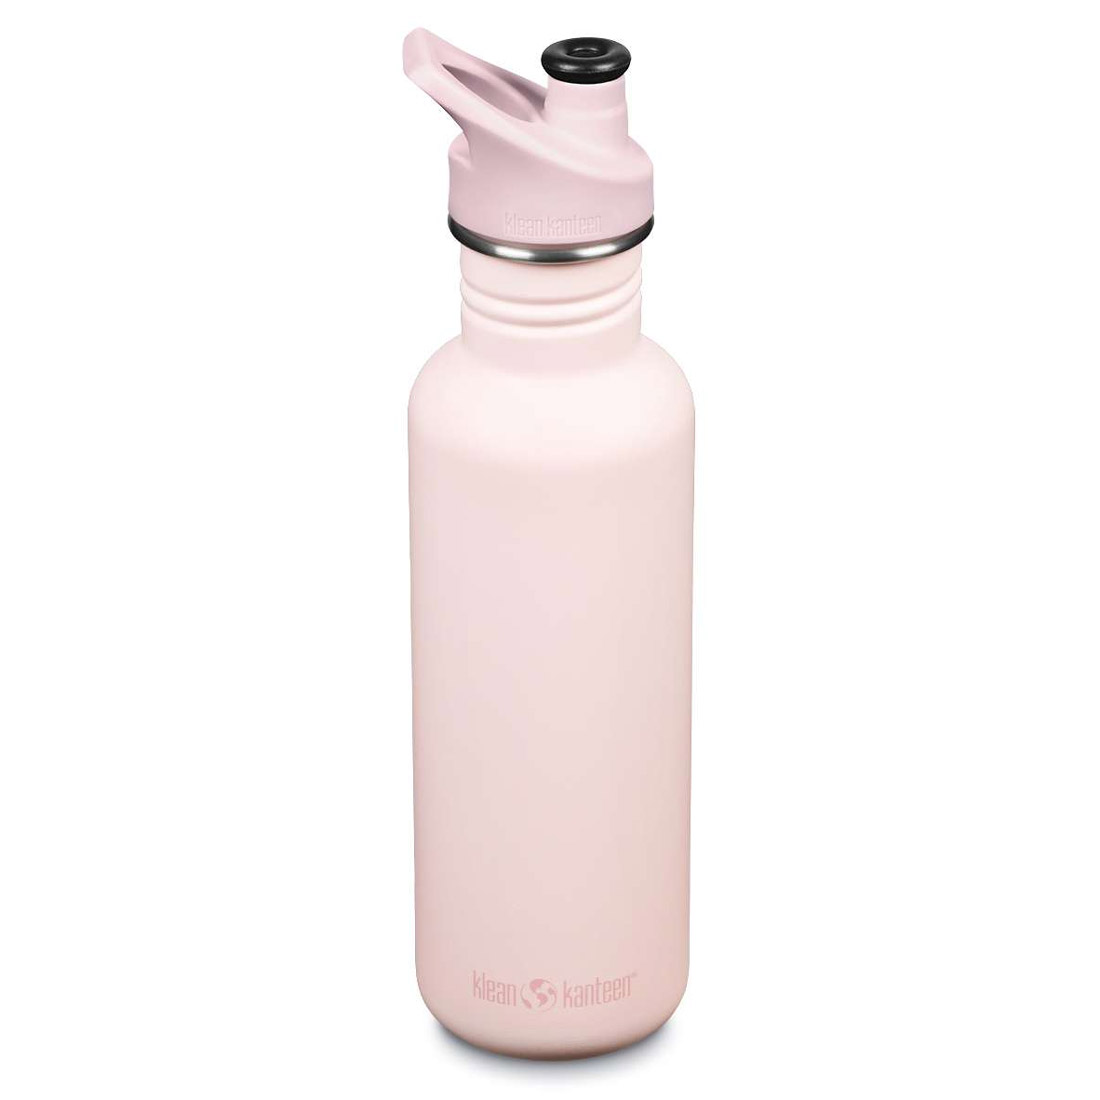 Productfoto van Klean Kanteen Classic Drinkfles met Sport Cap - 800 ml - Heavenly Pink